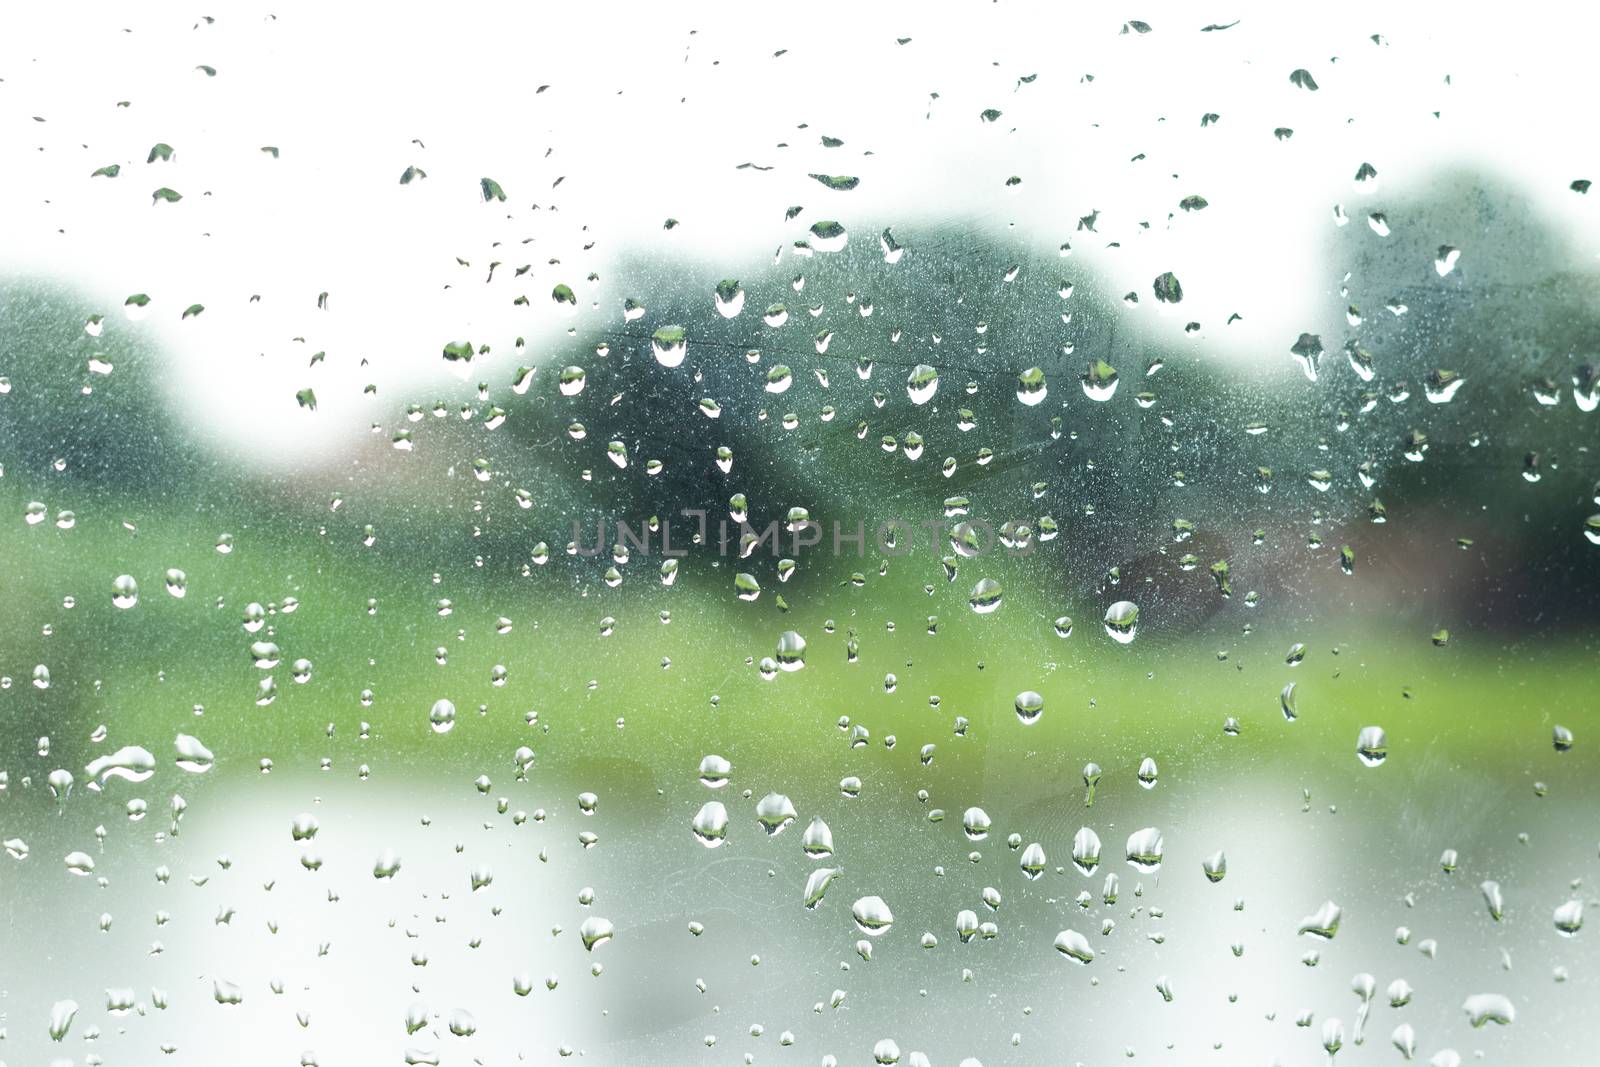 Rain drop on glass window background. by kaisorn